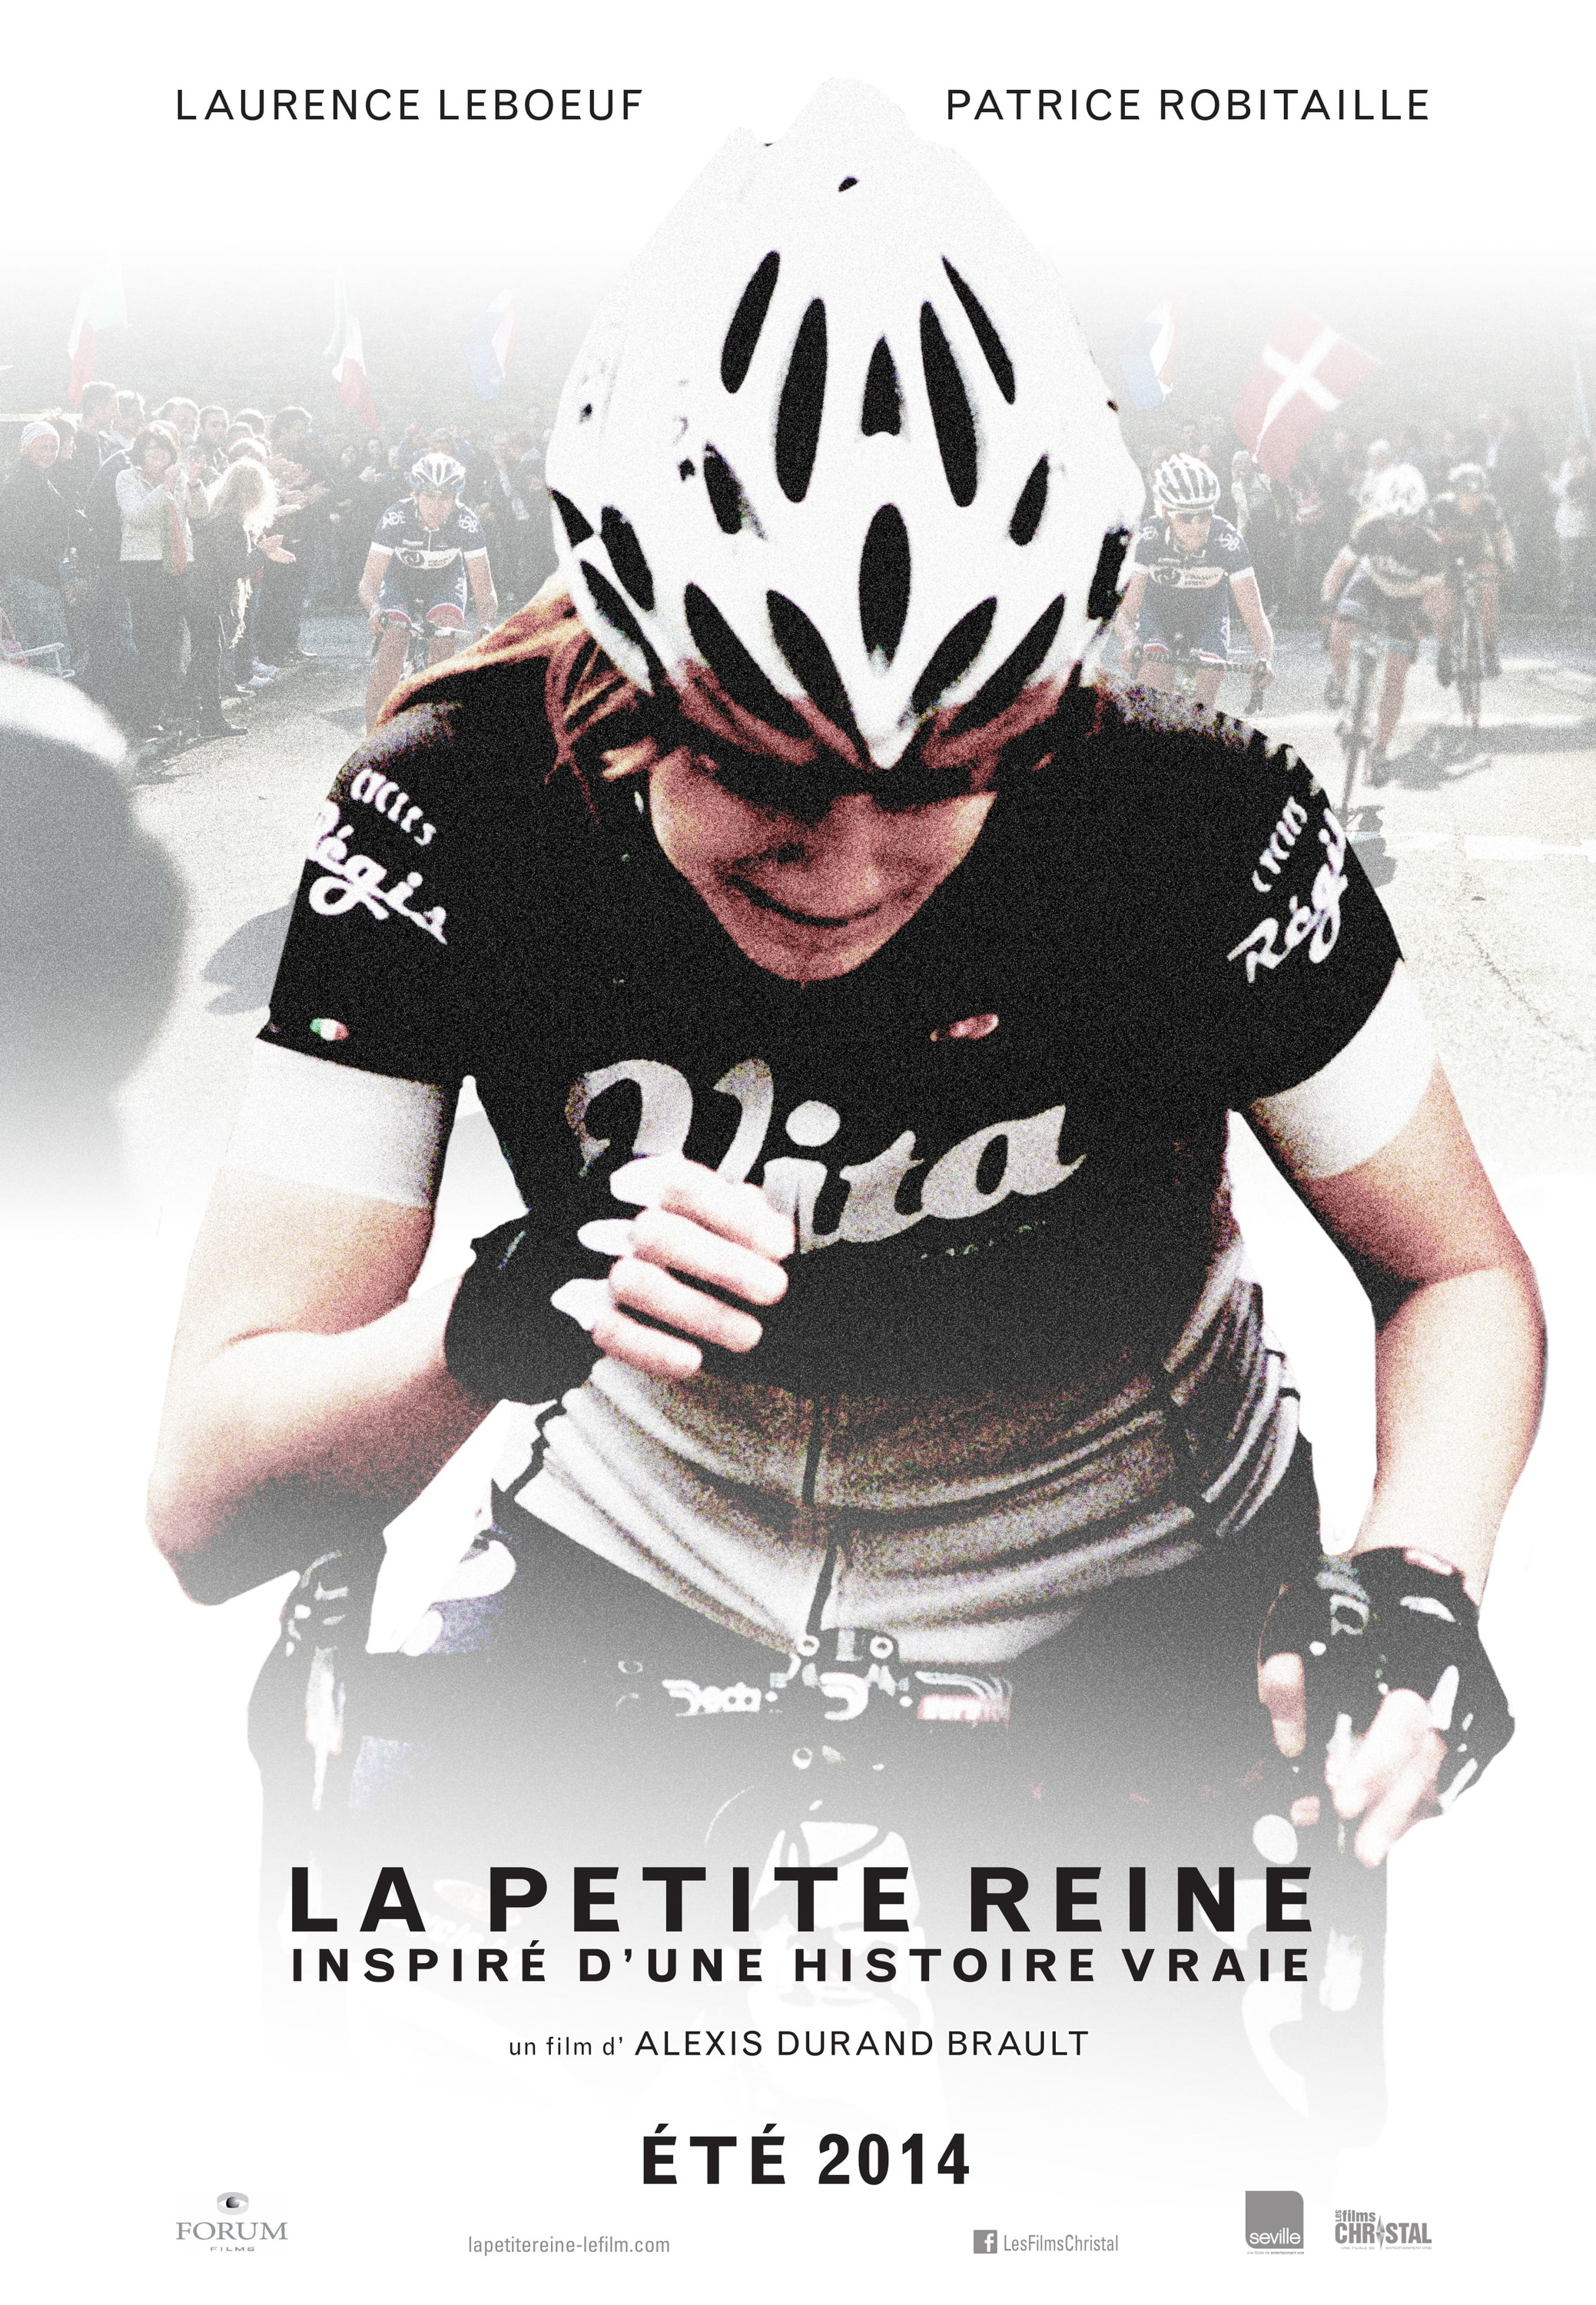 Mega Sized Movie Poster Image for La petite reine (#2 of 2)